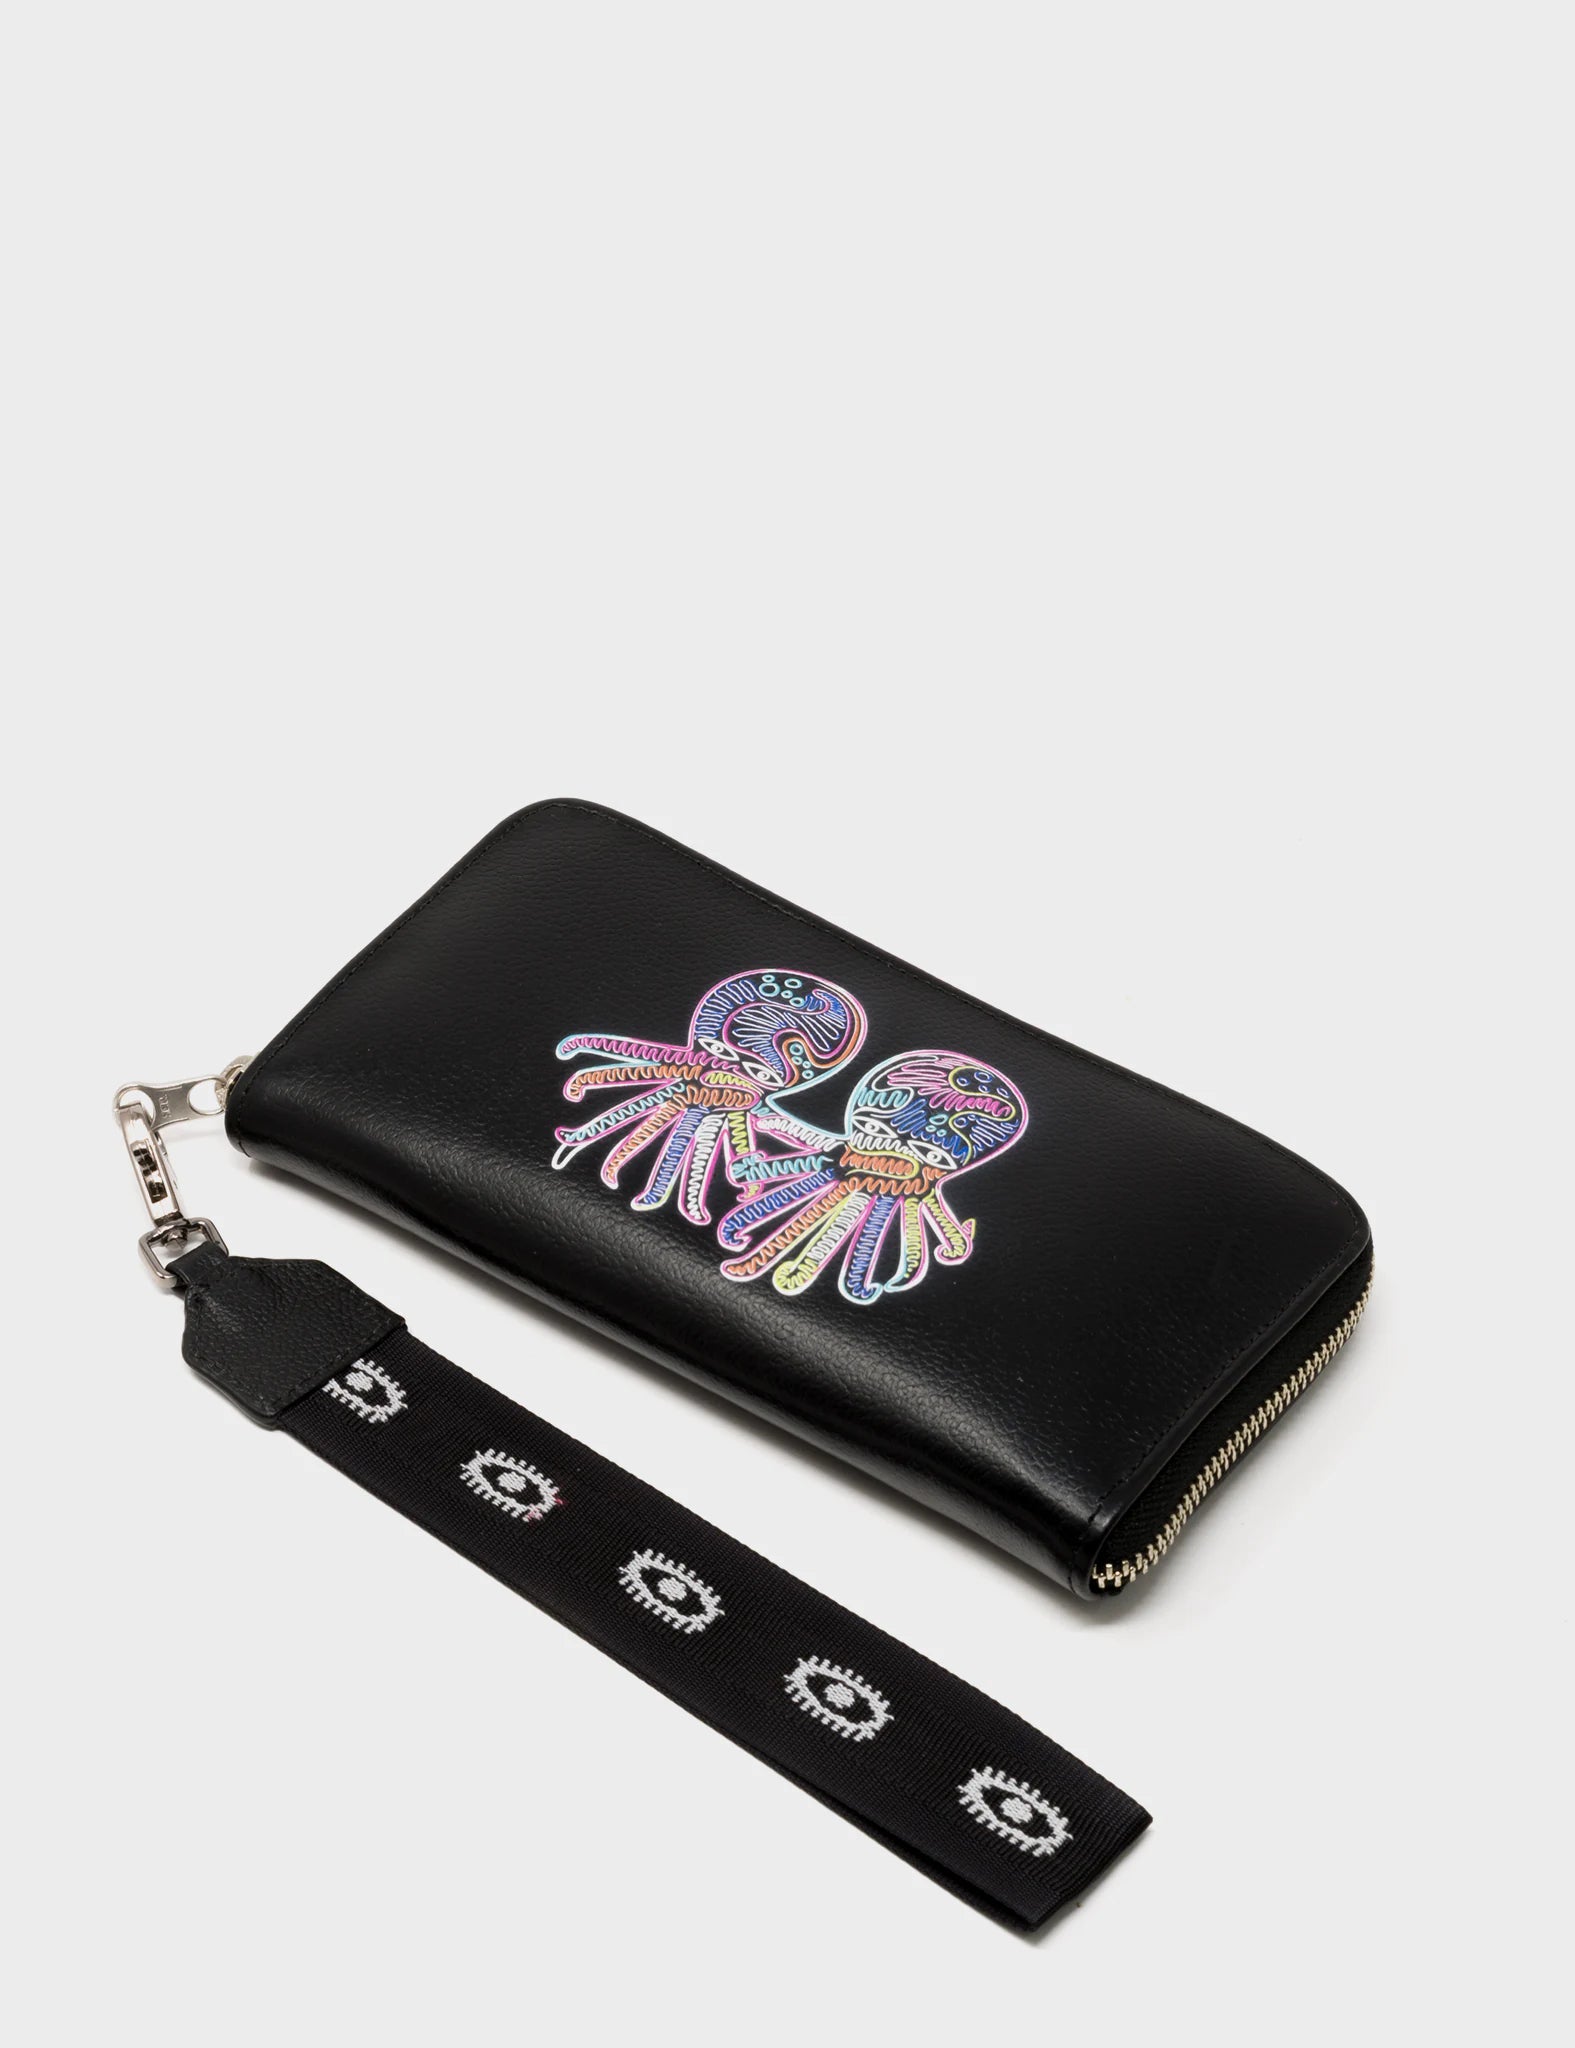 Zip-around Wallet Clutch Black Leather Multicolored Octopus - Top view 